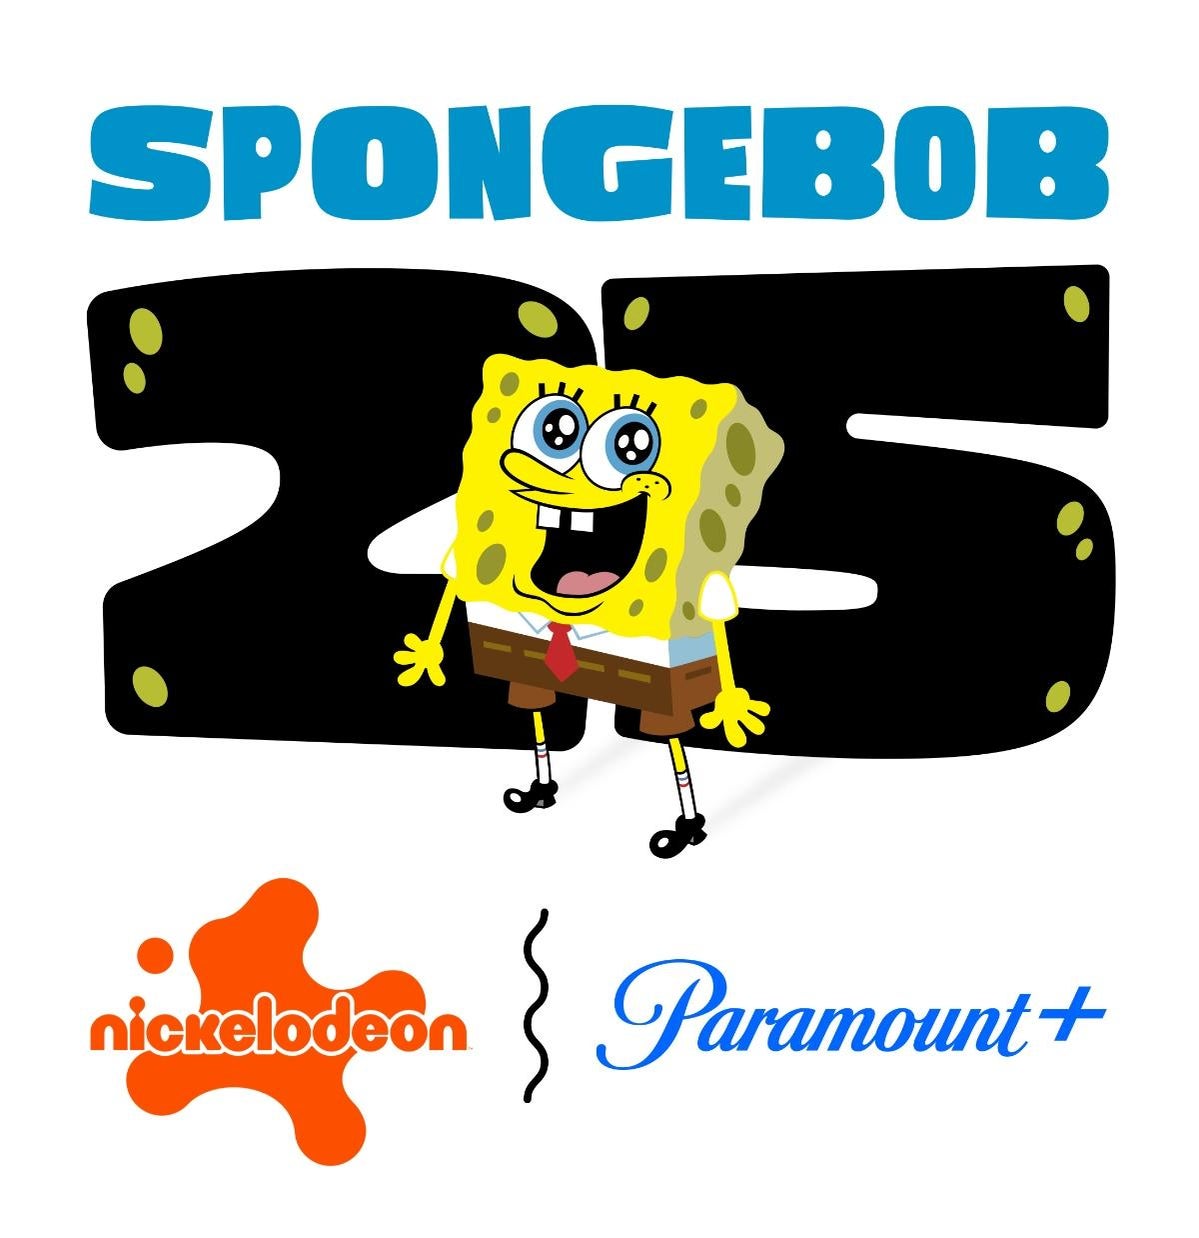 spongebob-squarepants-25th-anniversary-poster.jpg